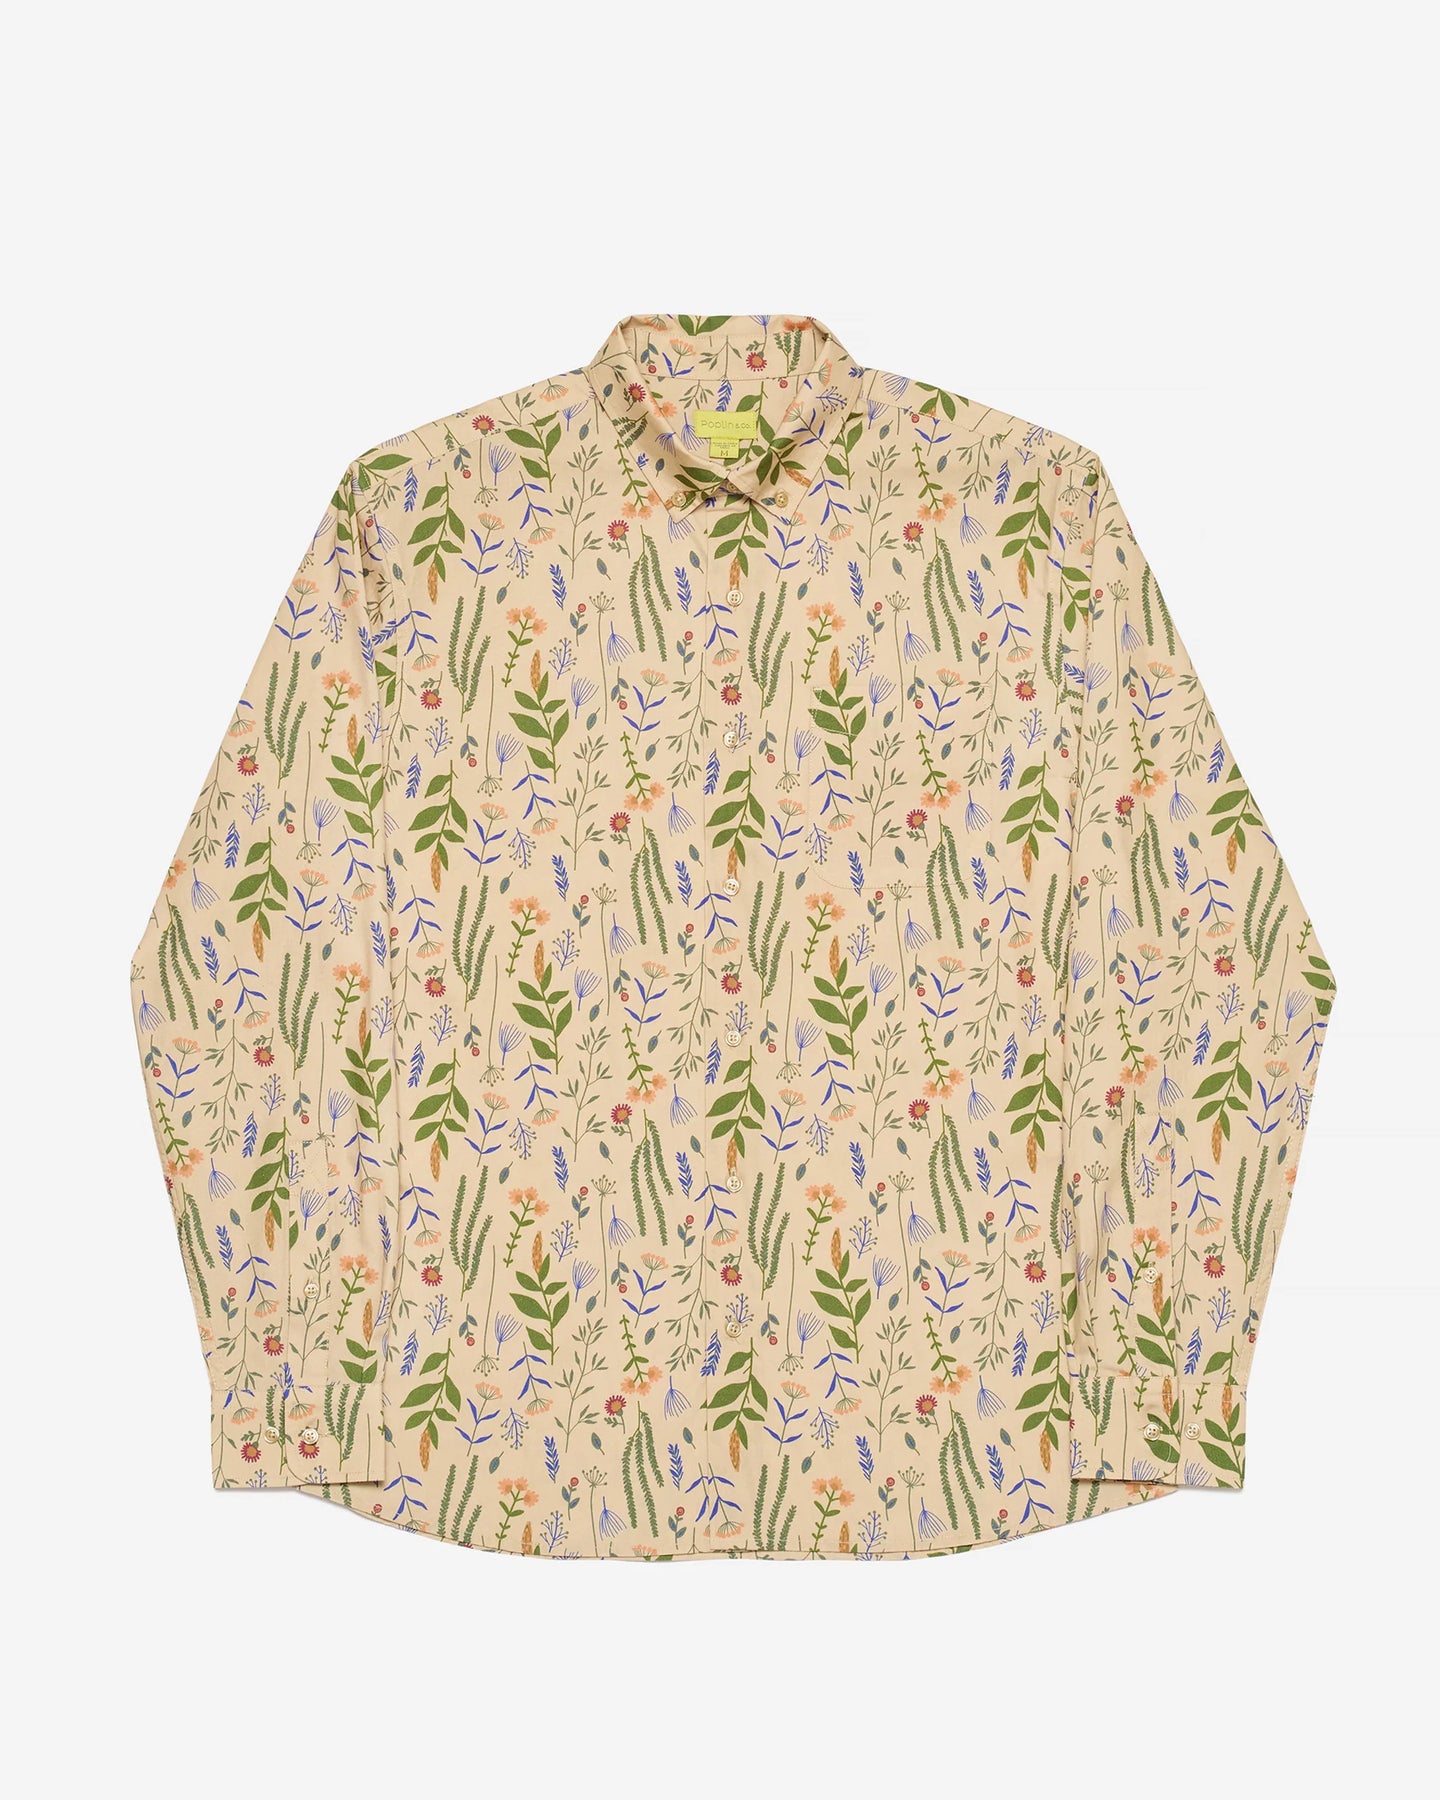 Poplin & Co Men's Printed Shirt in Floral Land